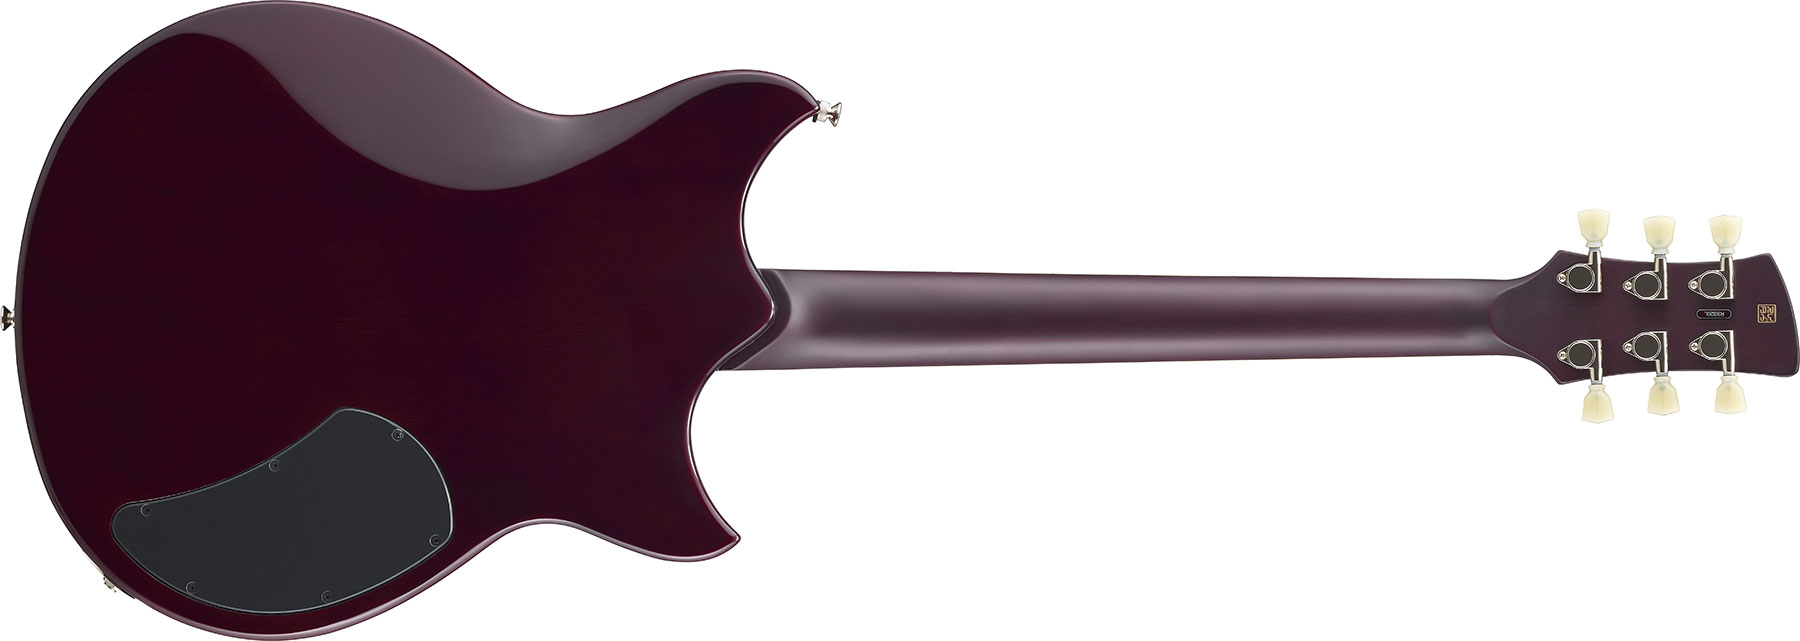 Yamaha Rss20l Revstar Standard Lh Gaucher Hh Ht Rw - Swift Blue - Guitarra electrica para zurdos - Variation 2